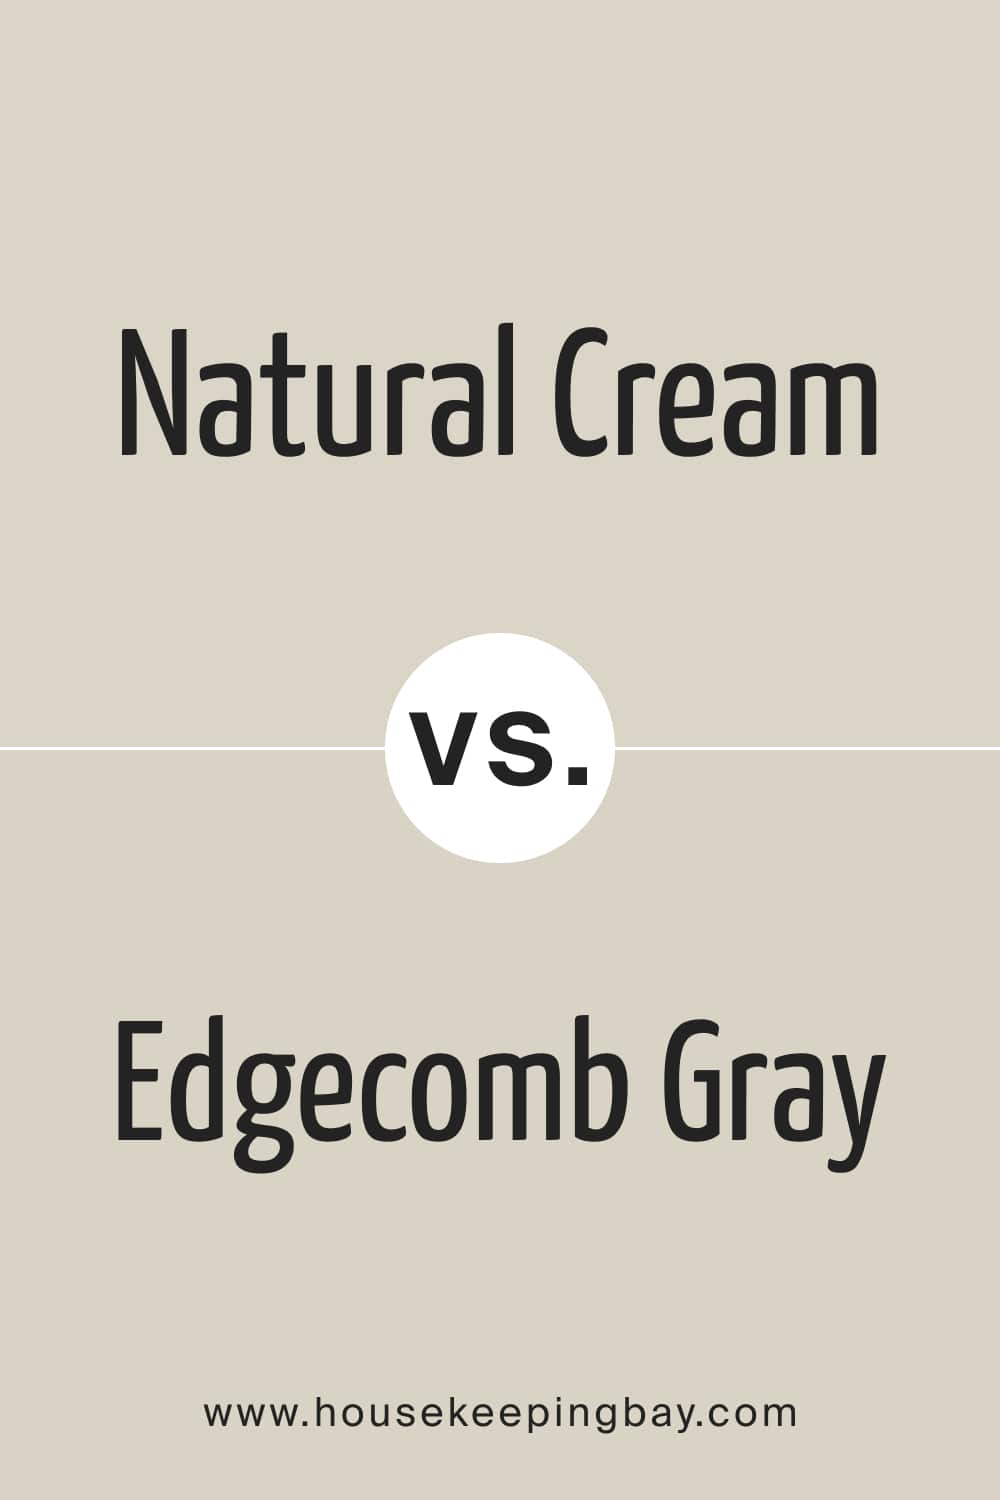 Natural Cream vs Edgecomb Gray